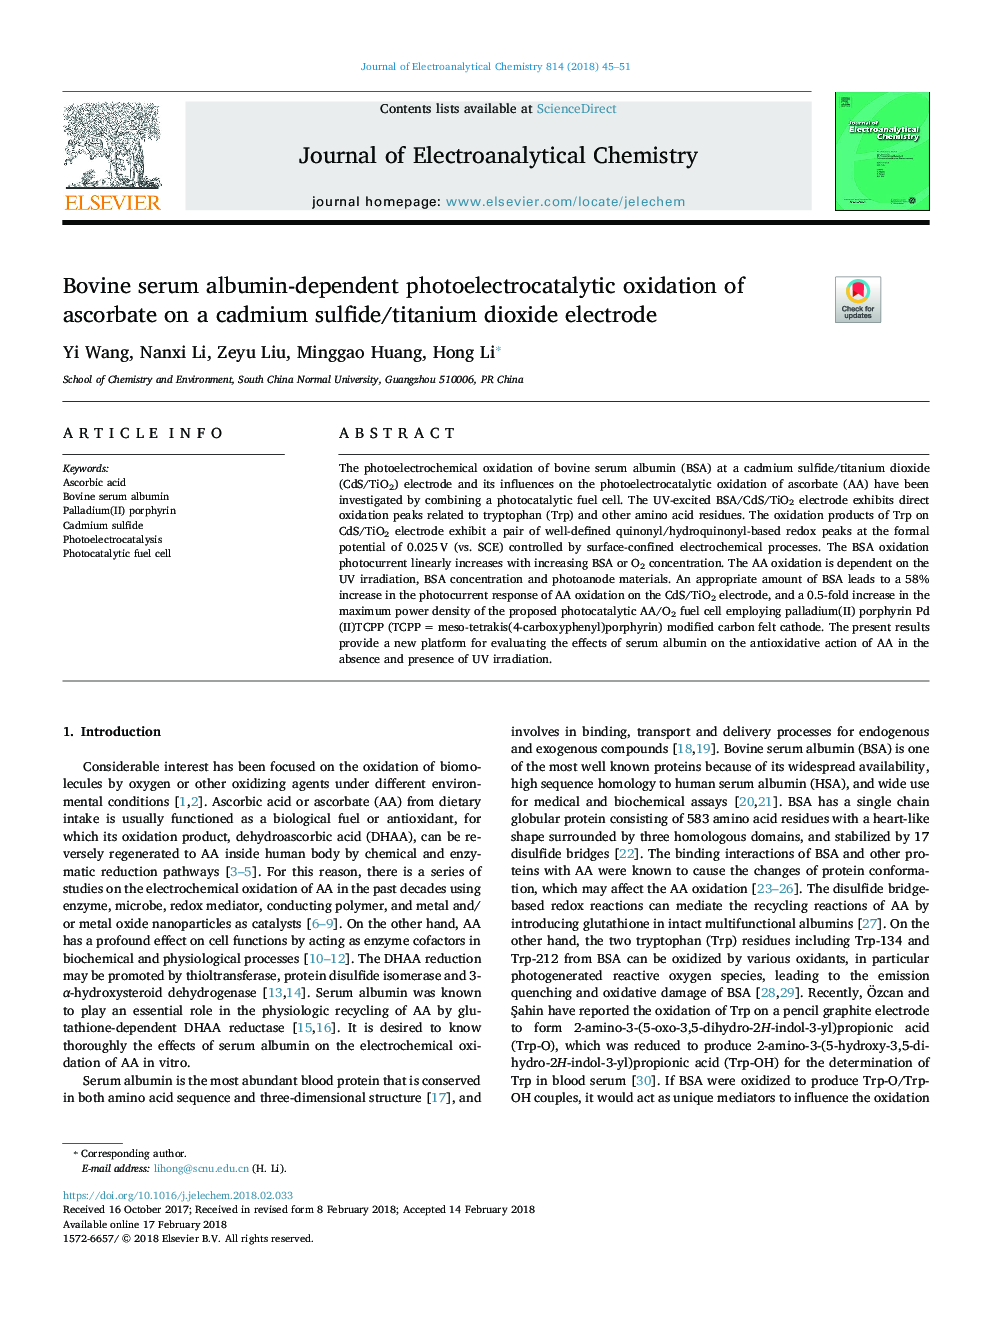 Bovine serum albumin-dependent photoelectrocatalytic oxidation of ascorbate on a cadmium sulfide/titanium dioxide electrode